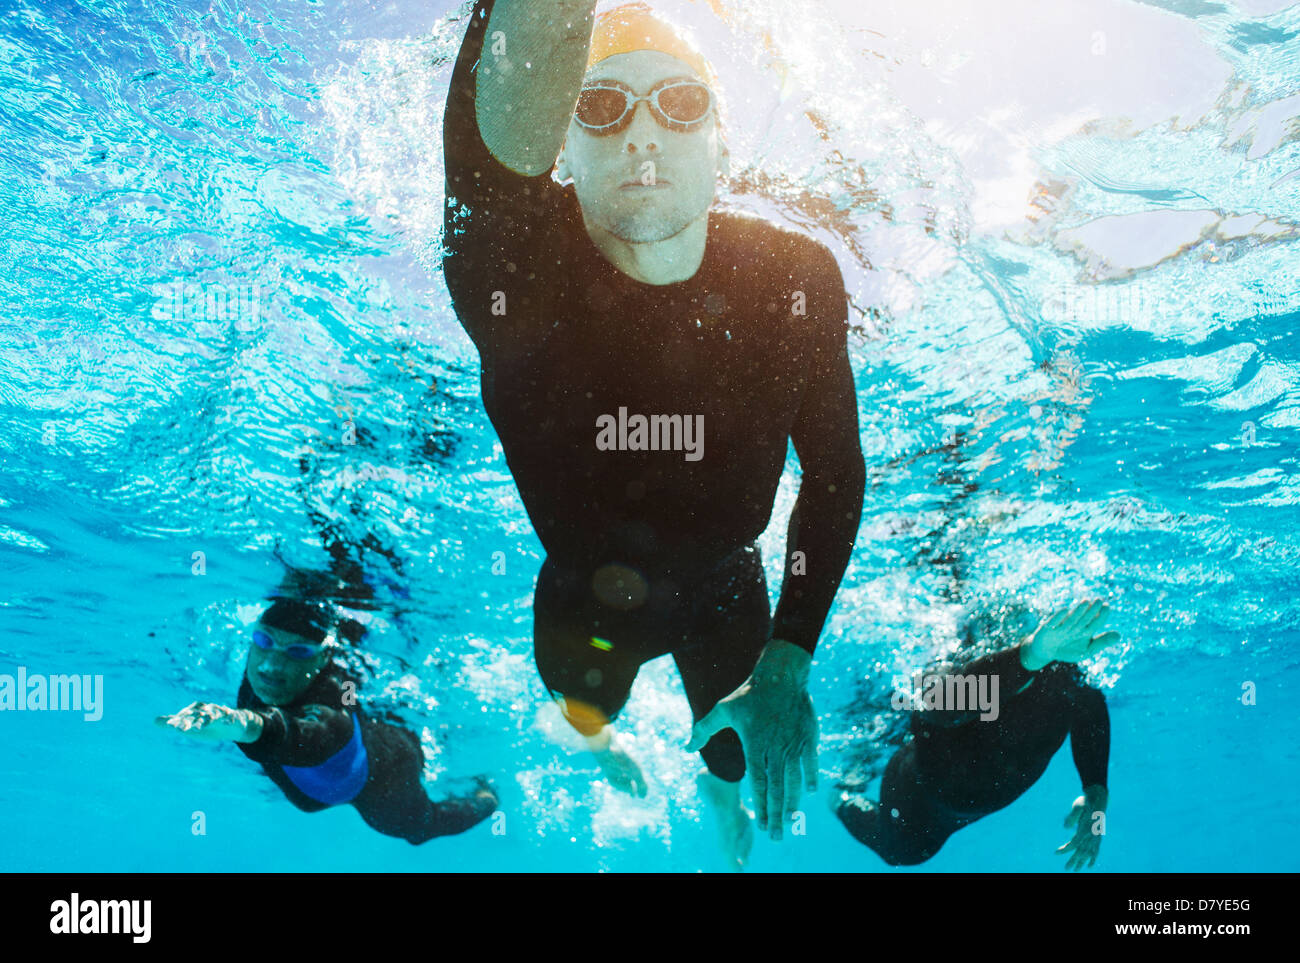 Triathletes in wetsuits underwater Stock Photo